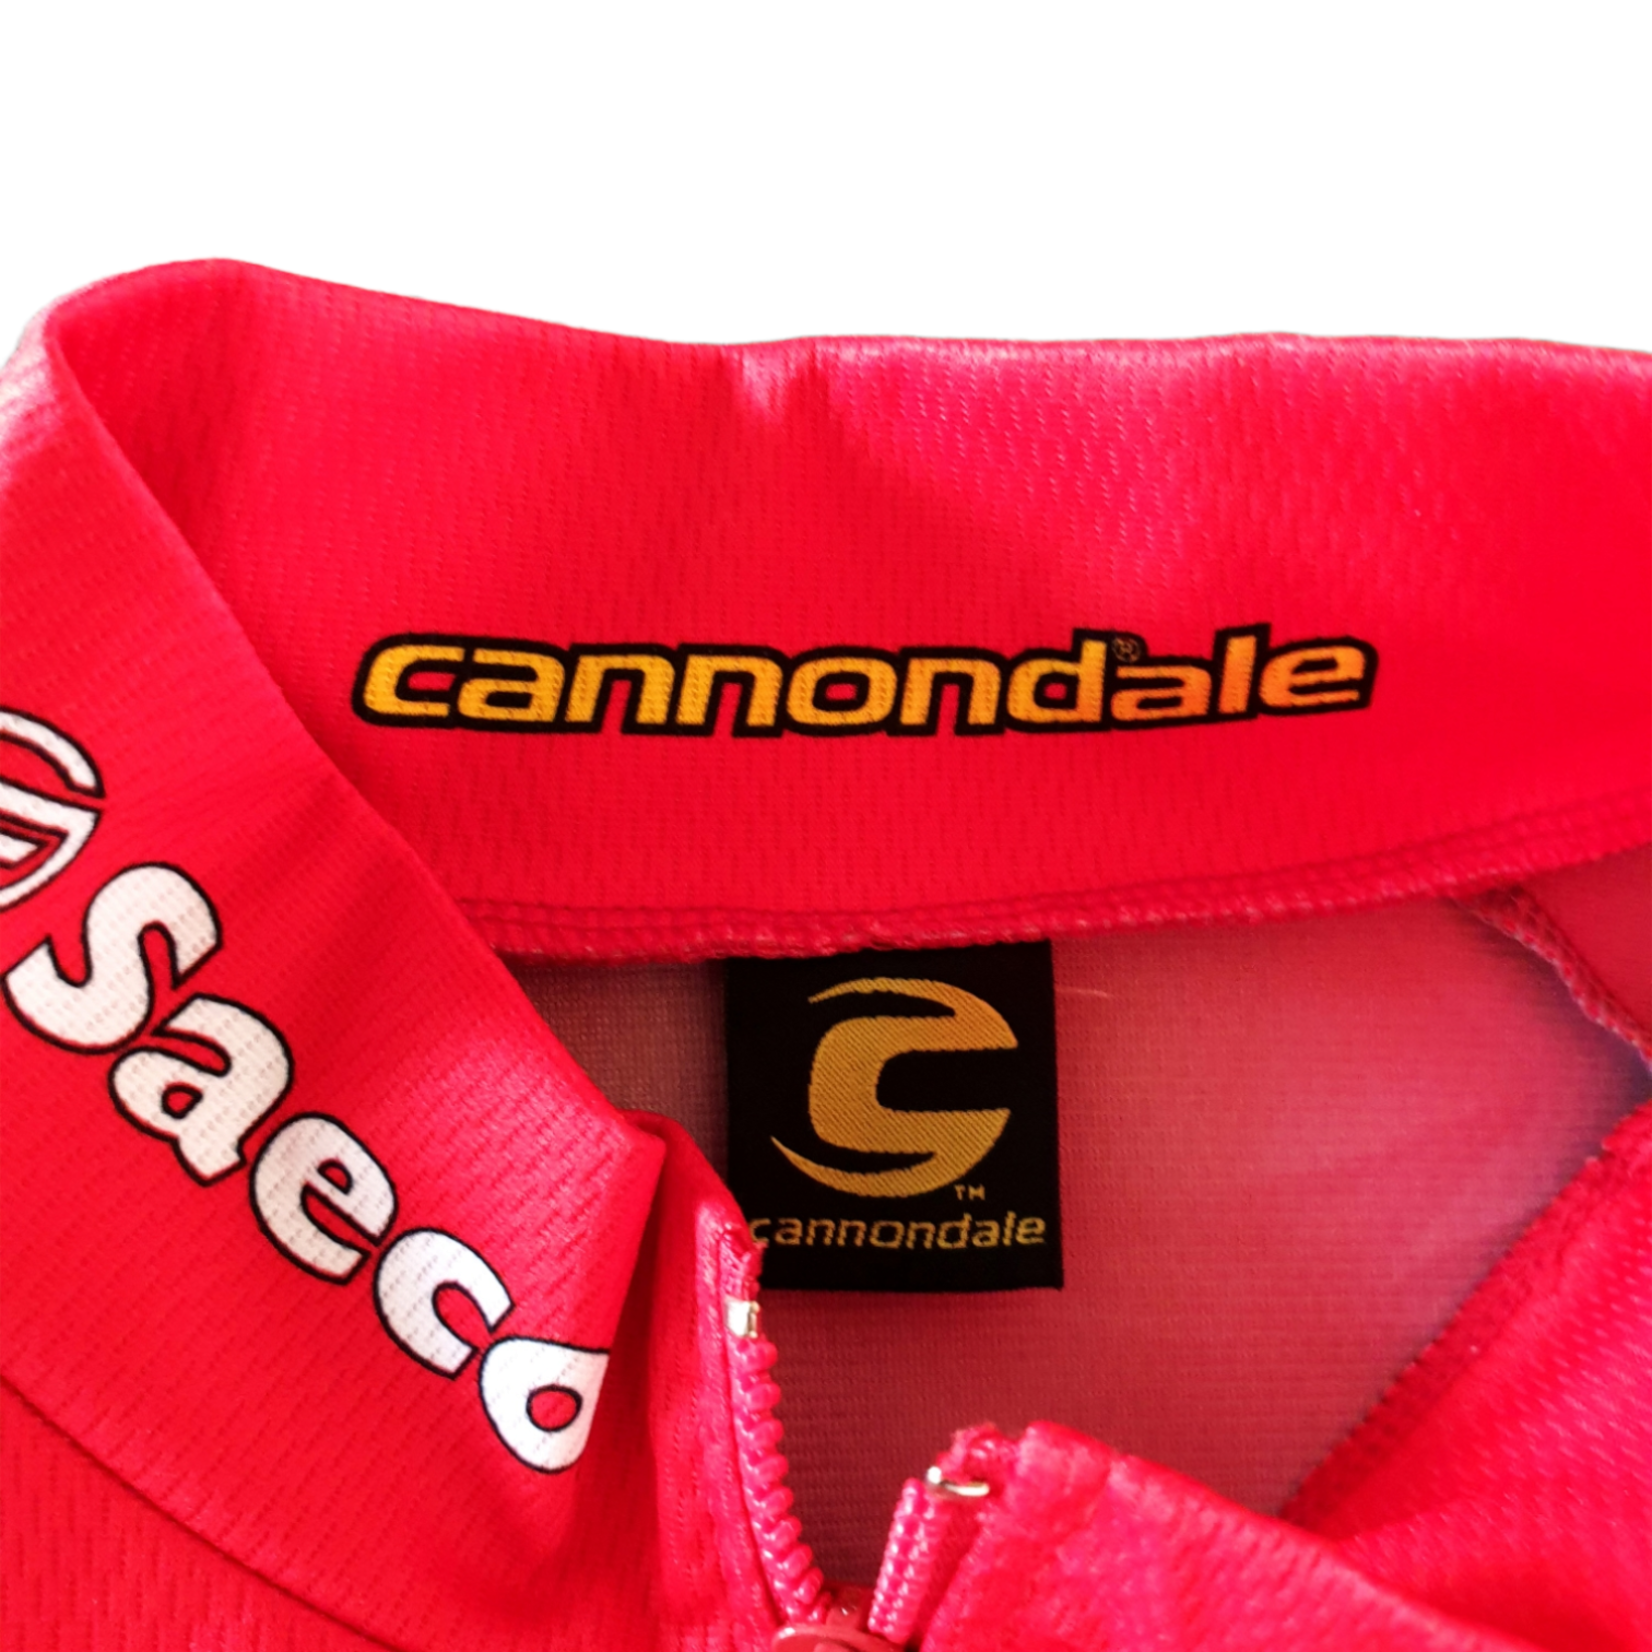 Cannondale Origineel Cannondale vintage wielershirt Saeco - Macchine per Caffé - Valli & Vall 2000